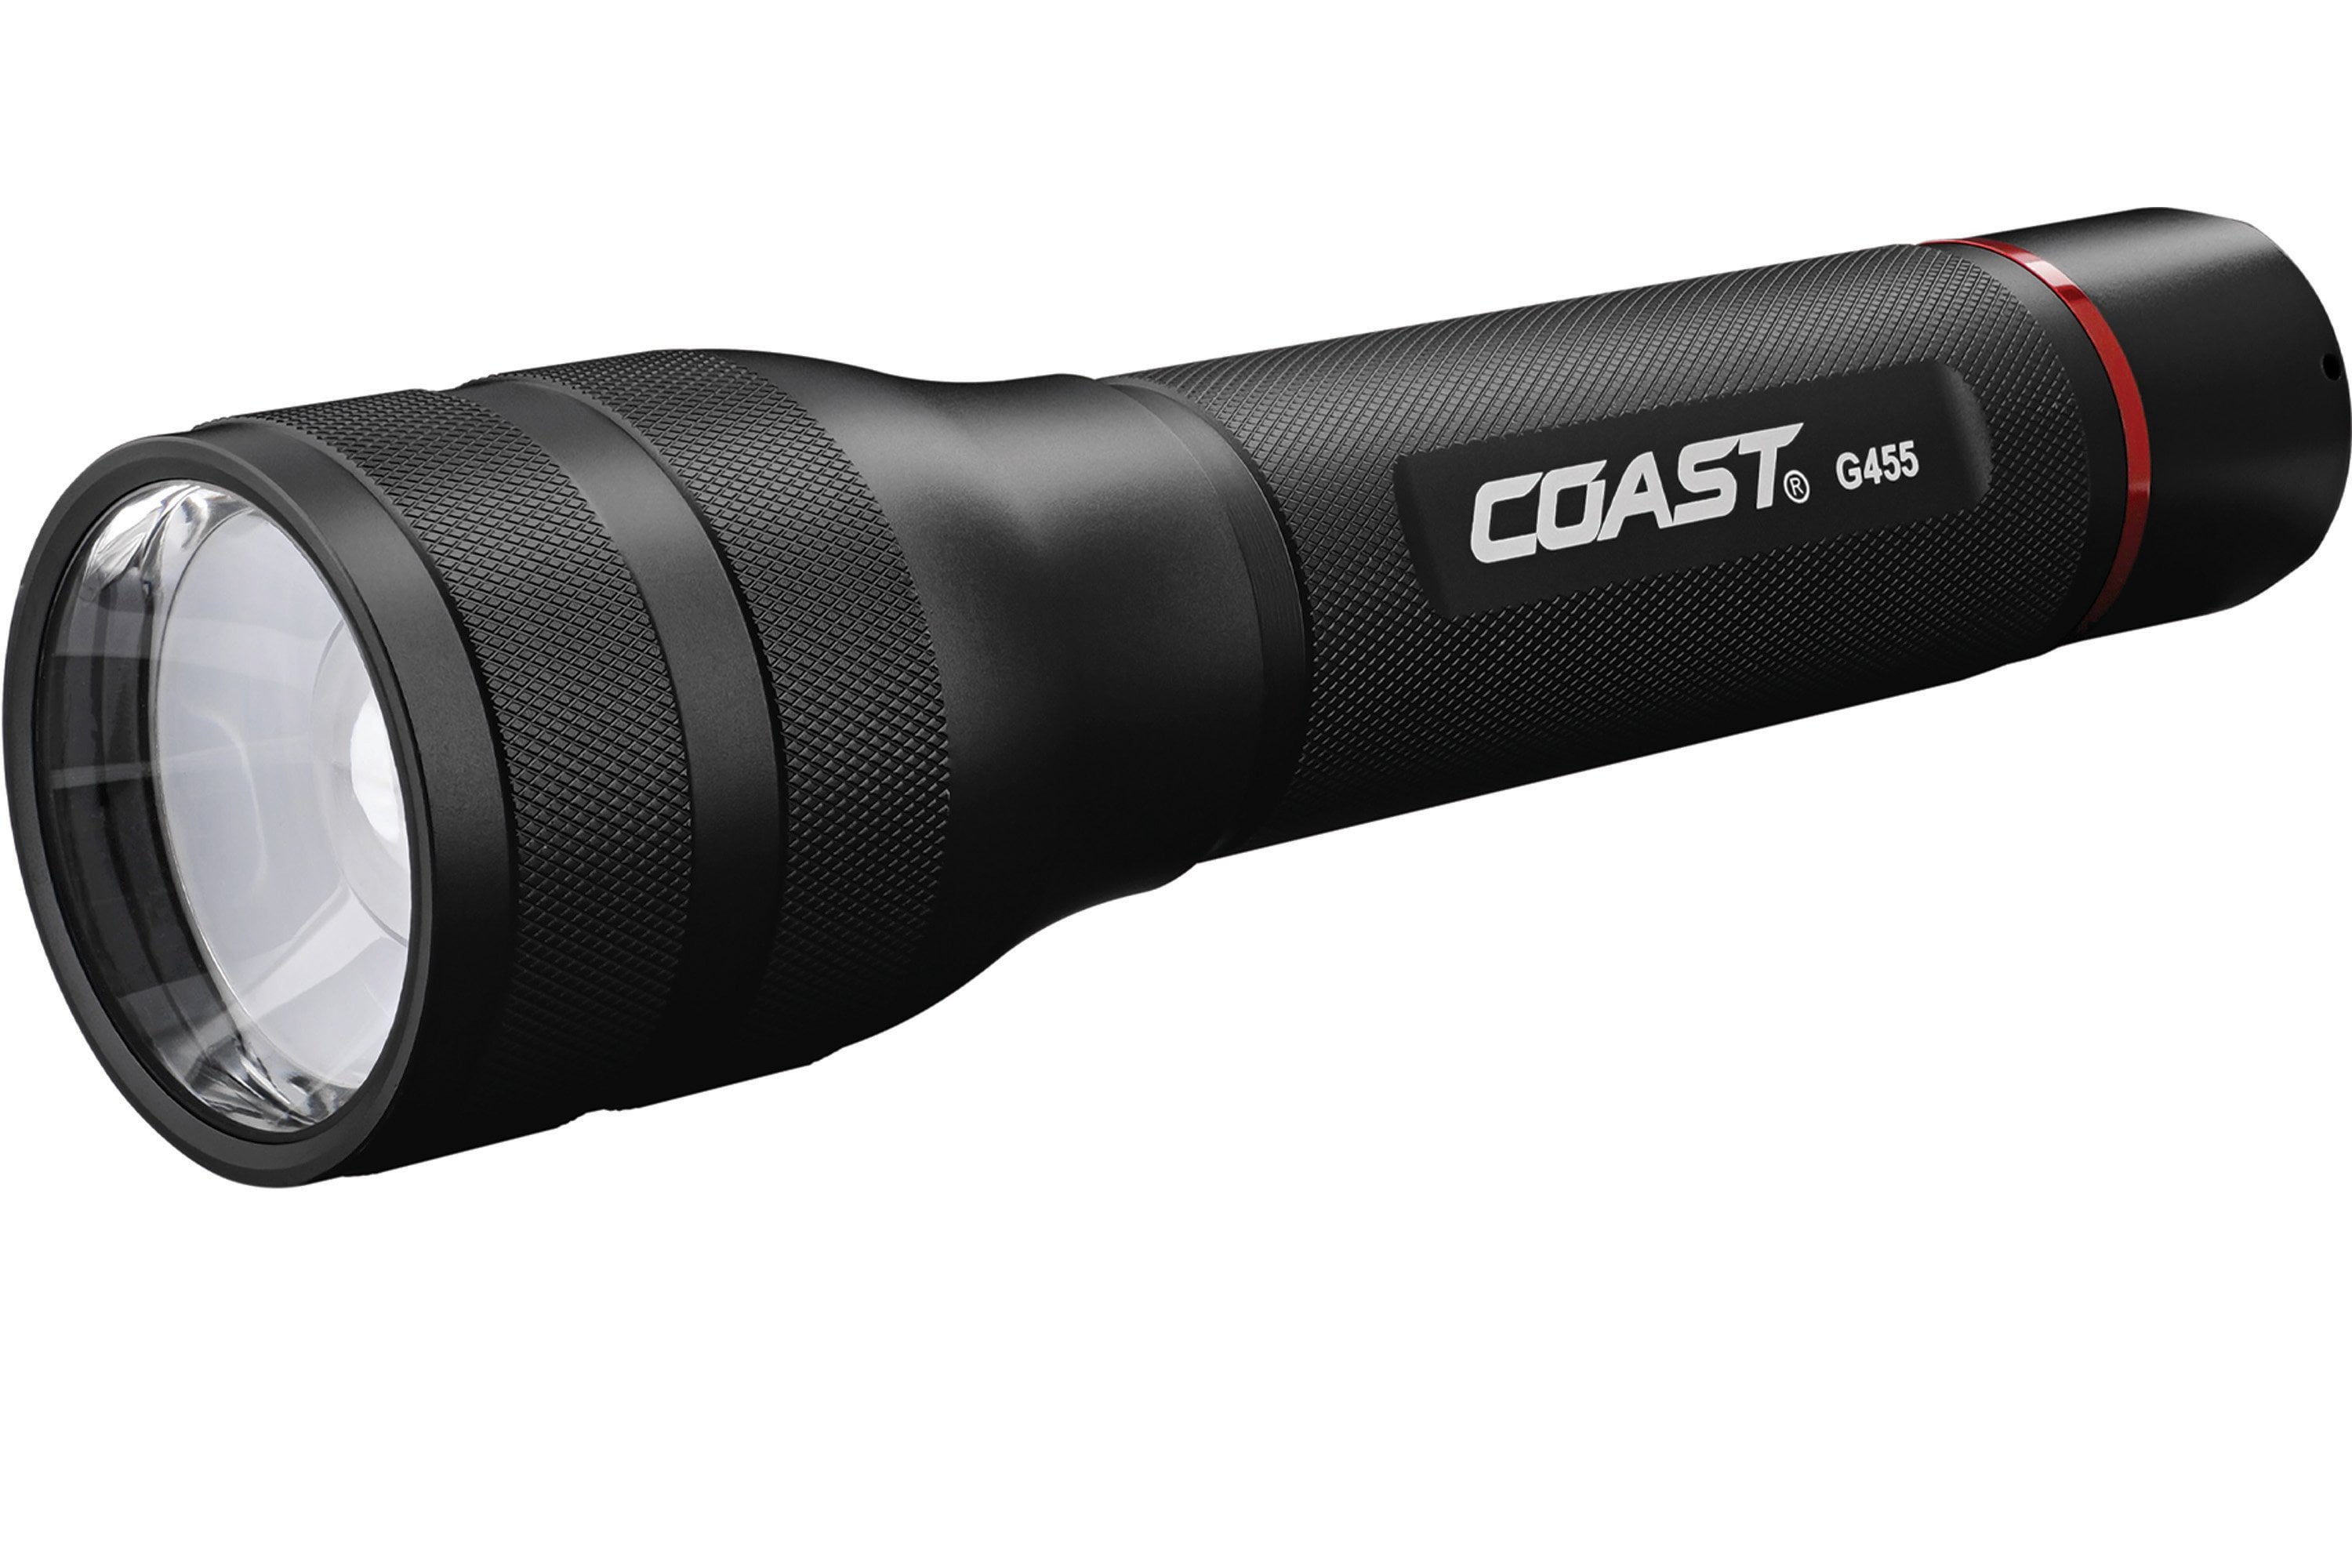 COAST G455 1630 Lumen Twist Focus LED Flashlight, 6 x Batteries Included, 21 oz. - Walmart.com